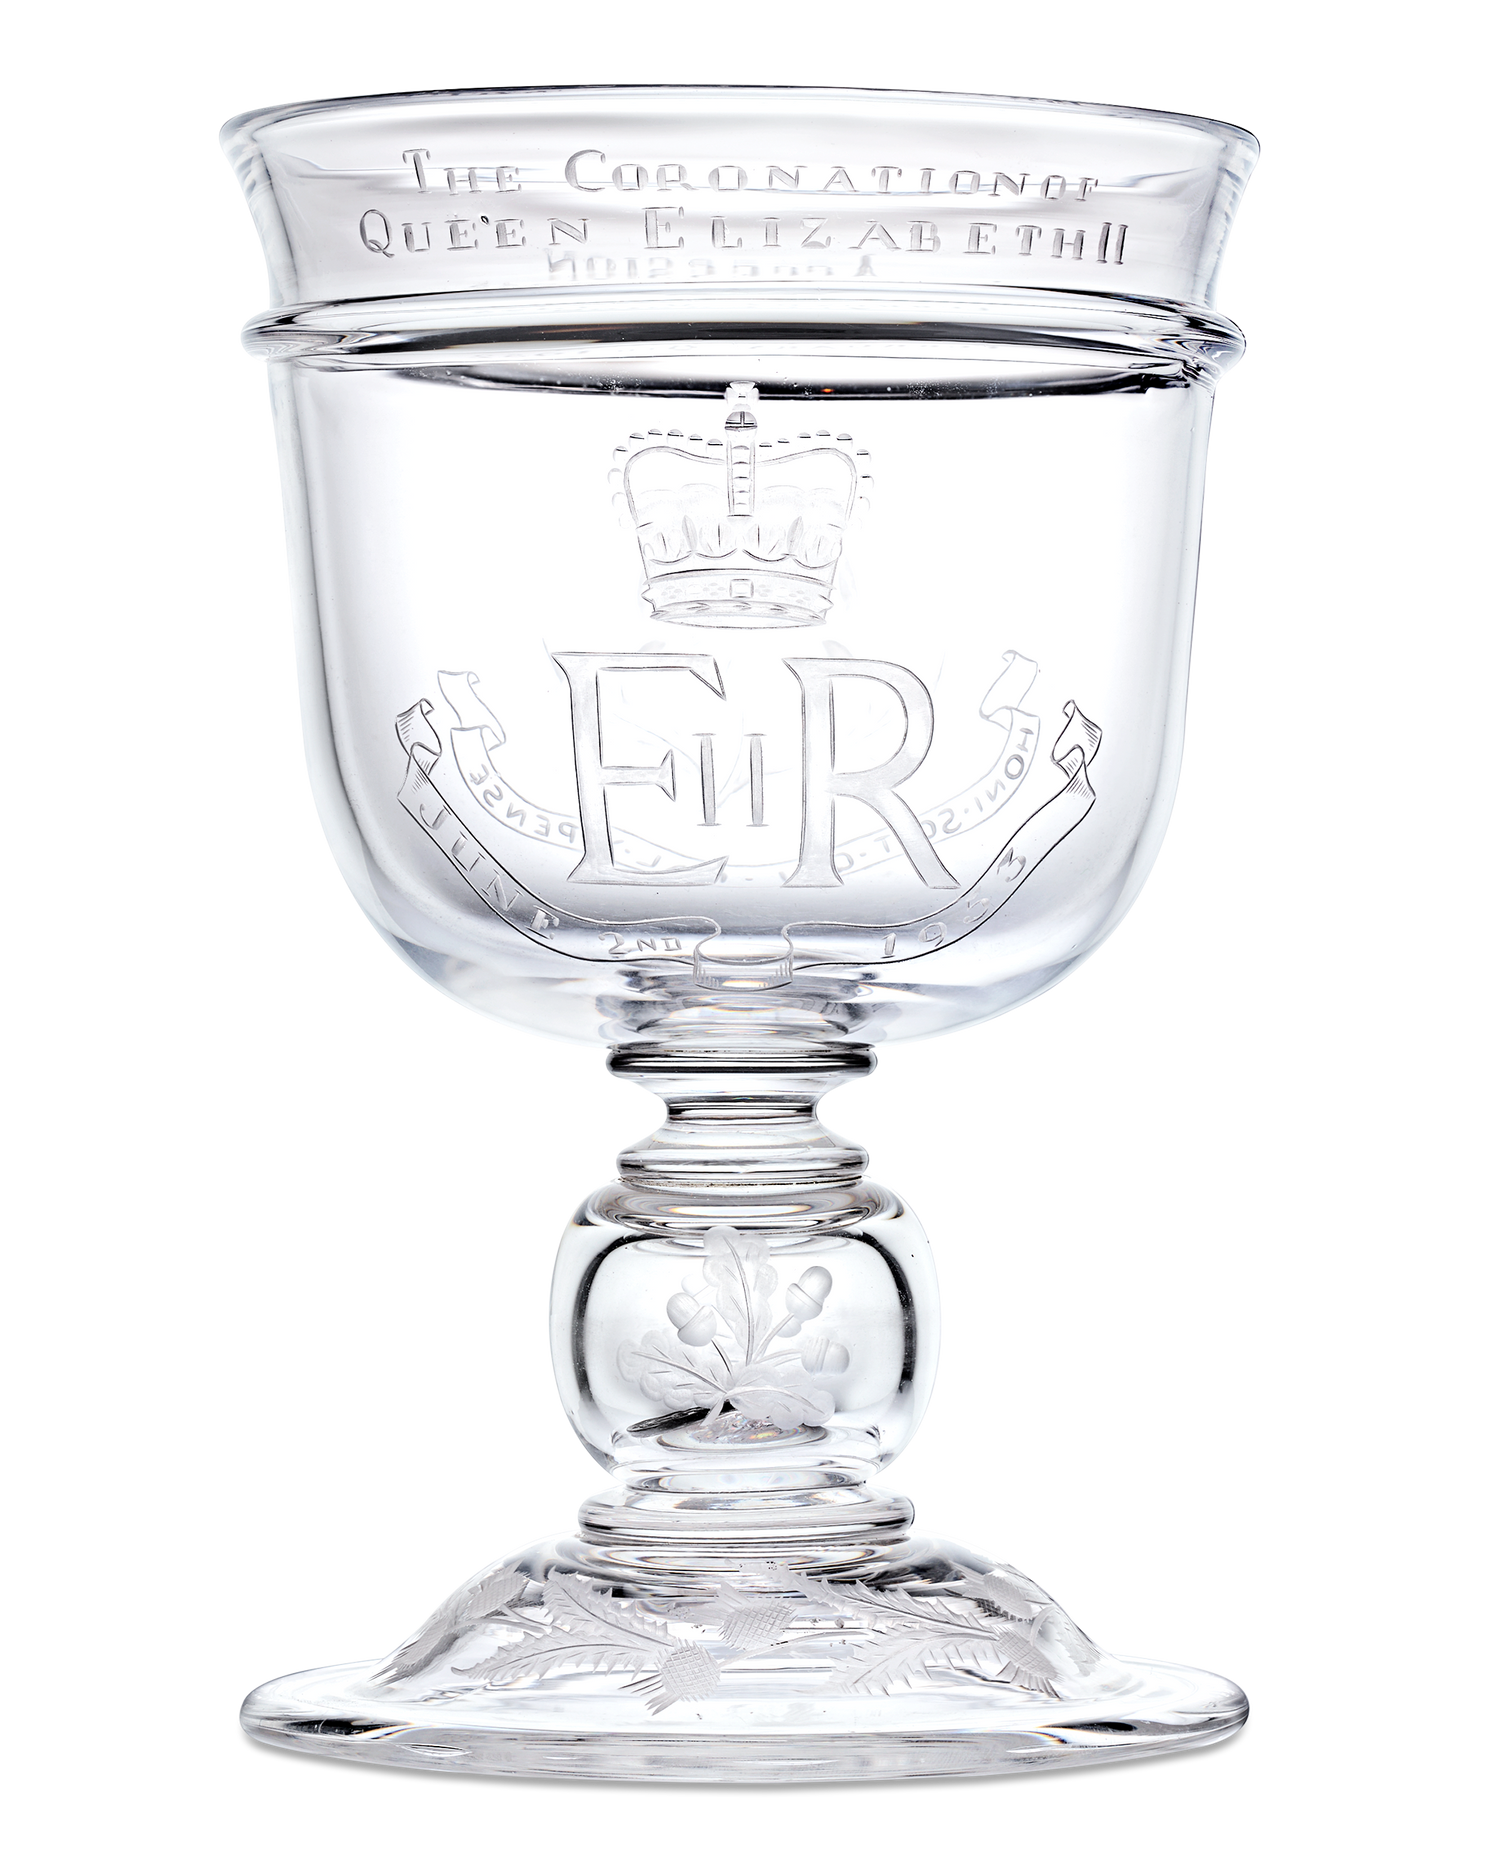 Elizabeth II Commemorative Coronation and Accession Goblet